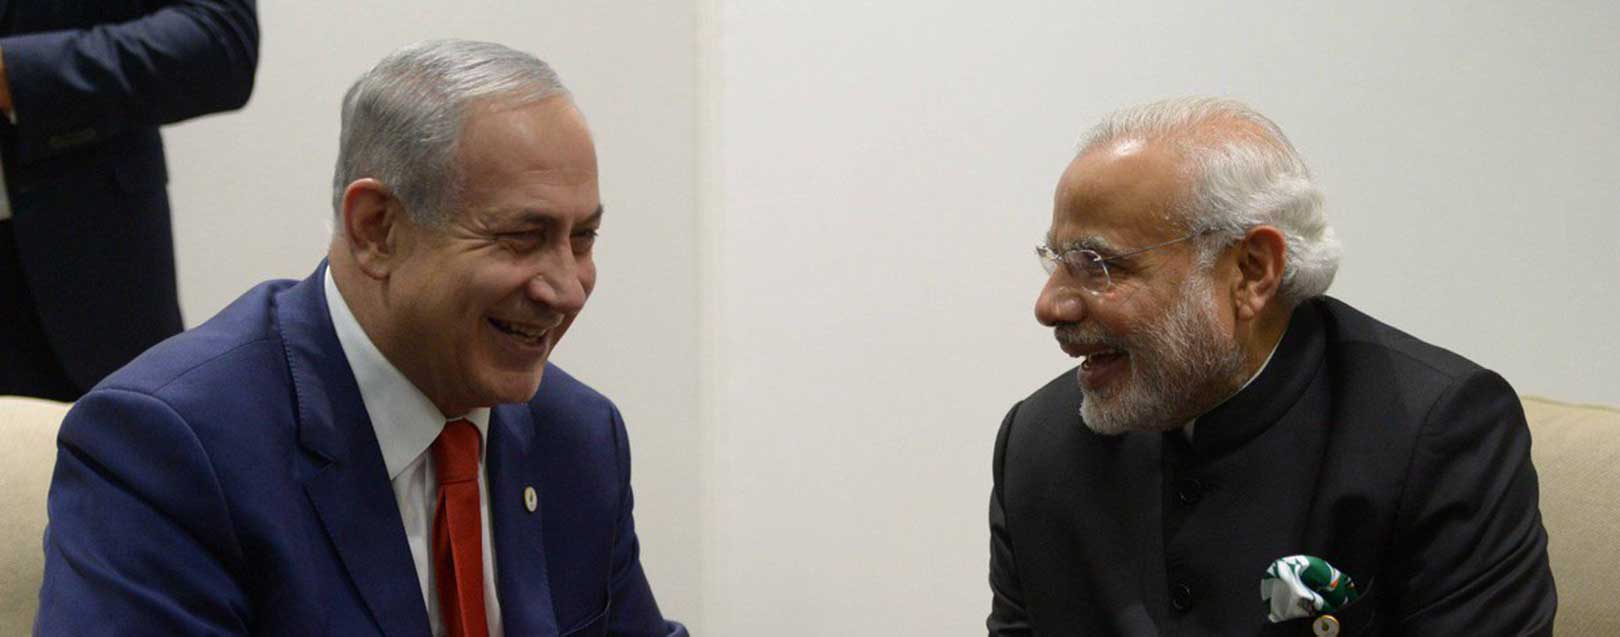 Modi world's most important PM: Israeli daily